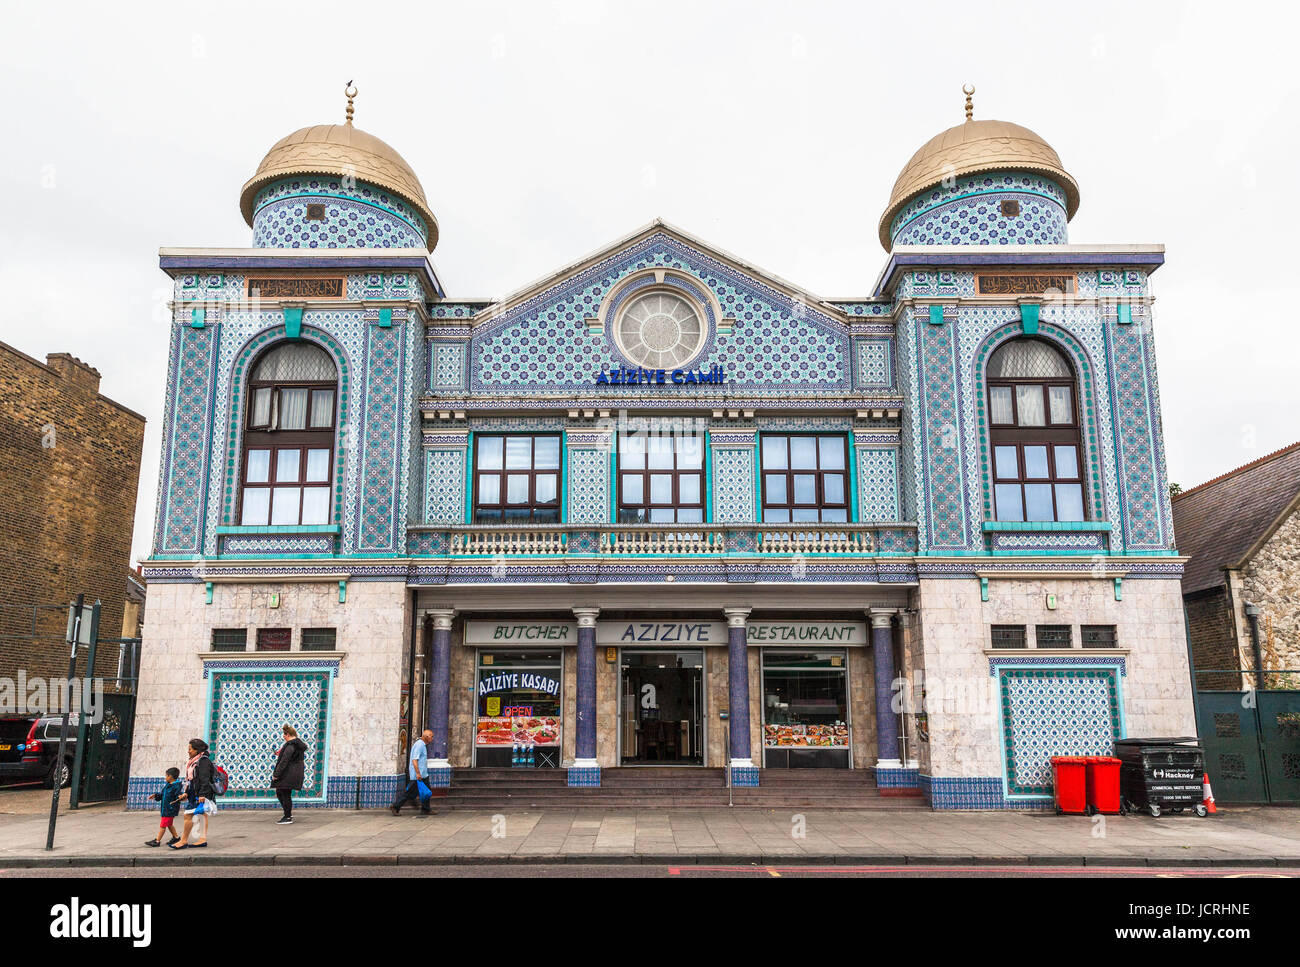 Aziziye Mosque front, Stoke Newington, London, England, UK. Stock Photo